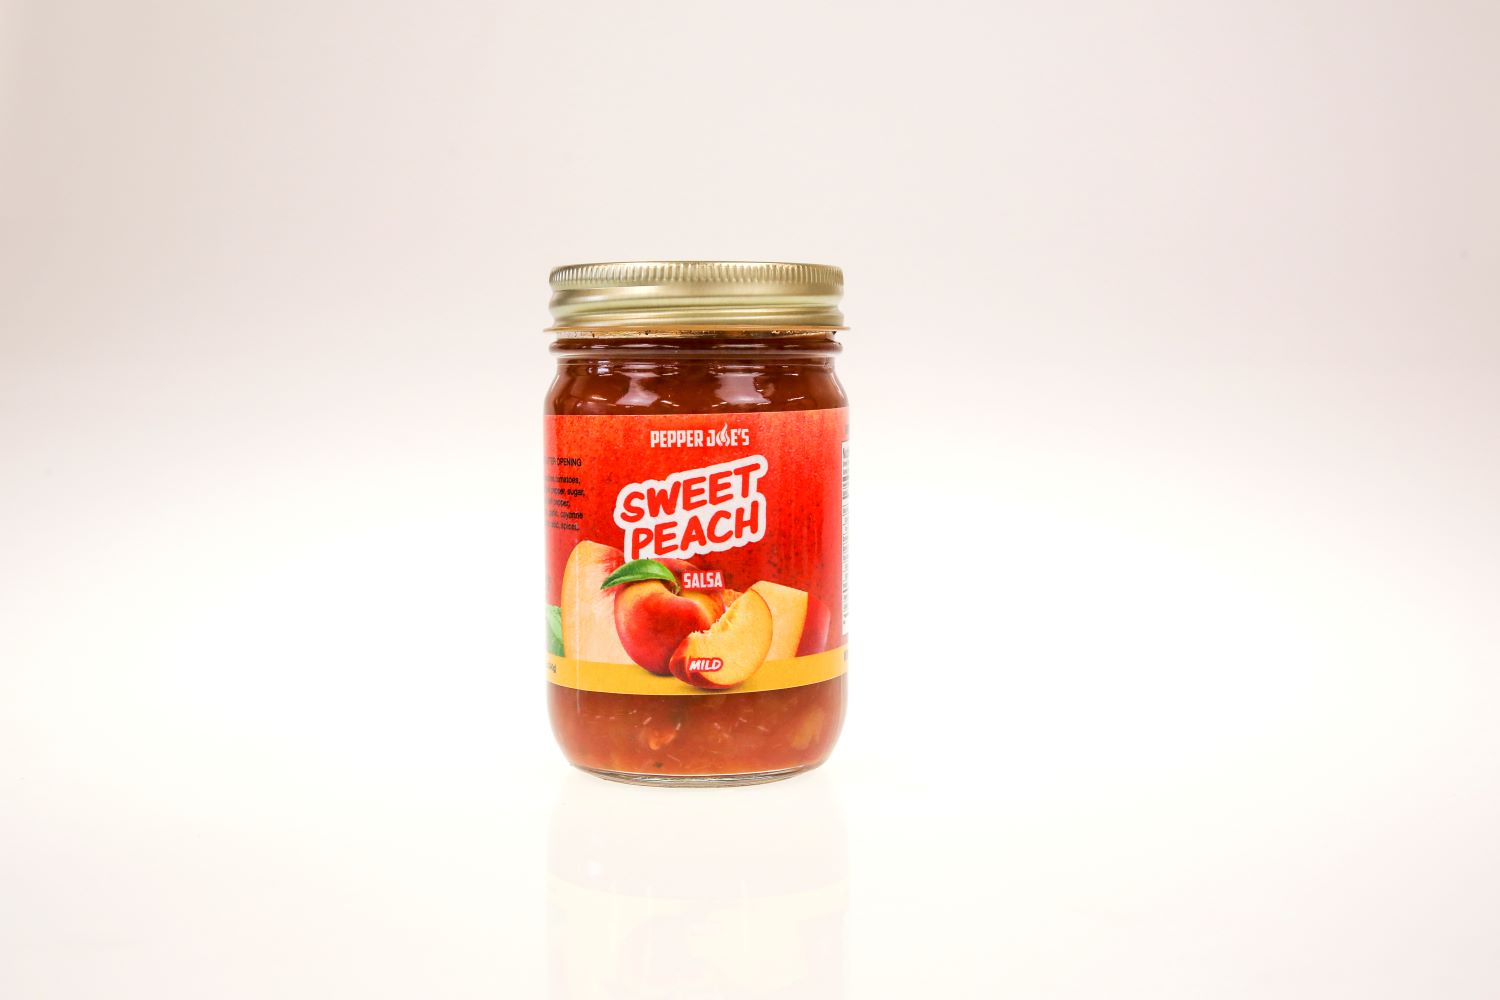 Pepper Joe's Sweet and Spicy Salsa 5-Pack - salsa gift set - sweet peach salsa jar on white background